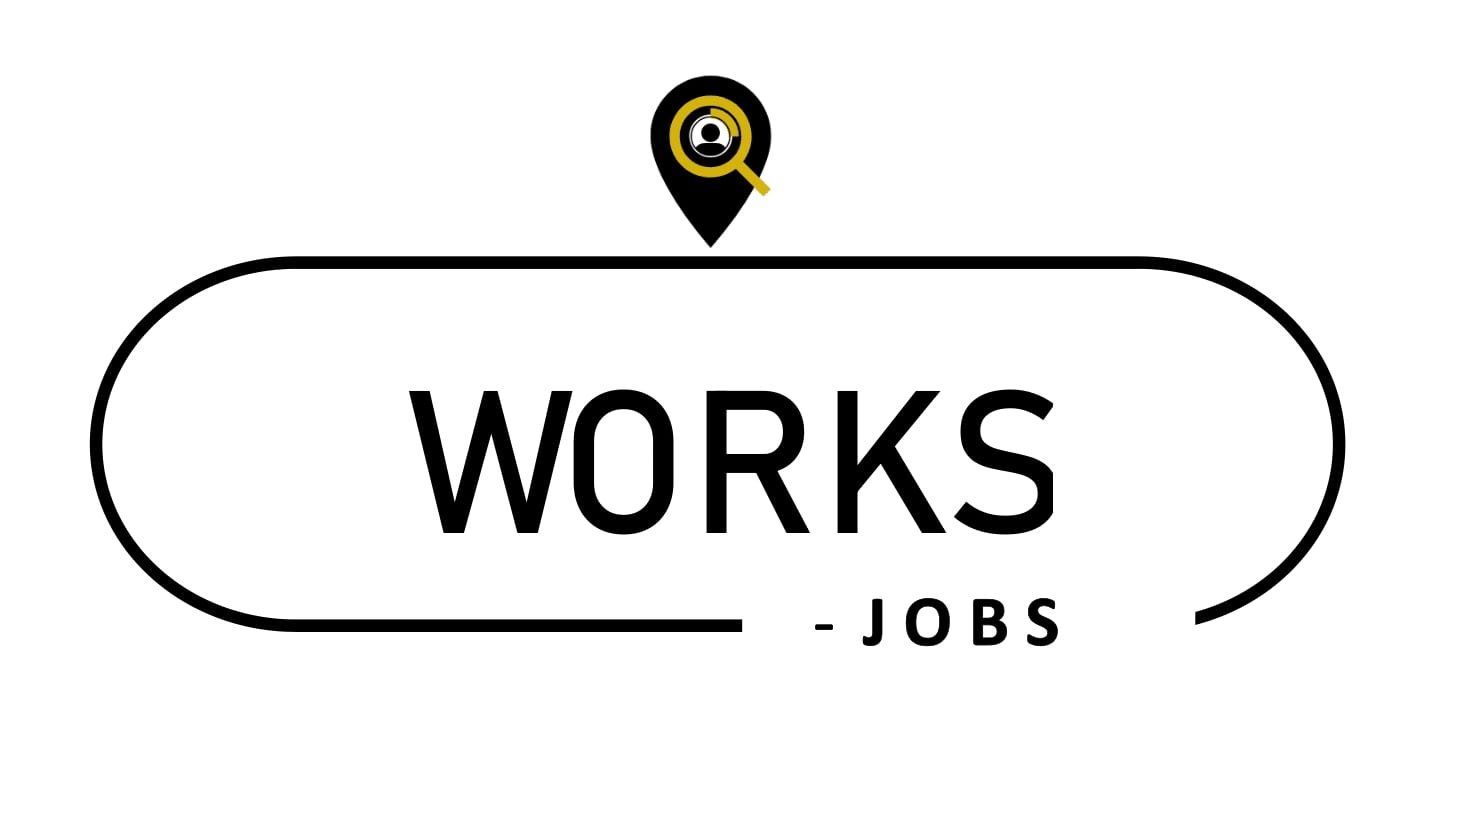 Works Jobs